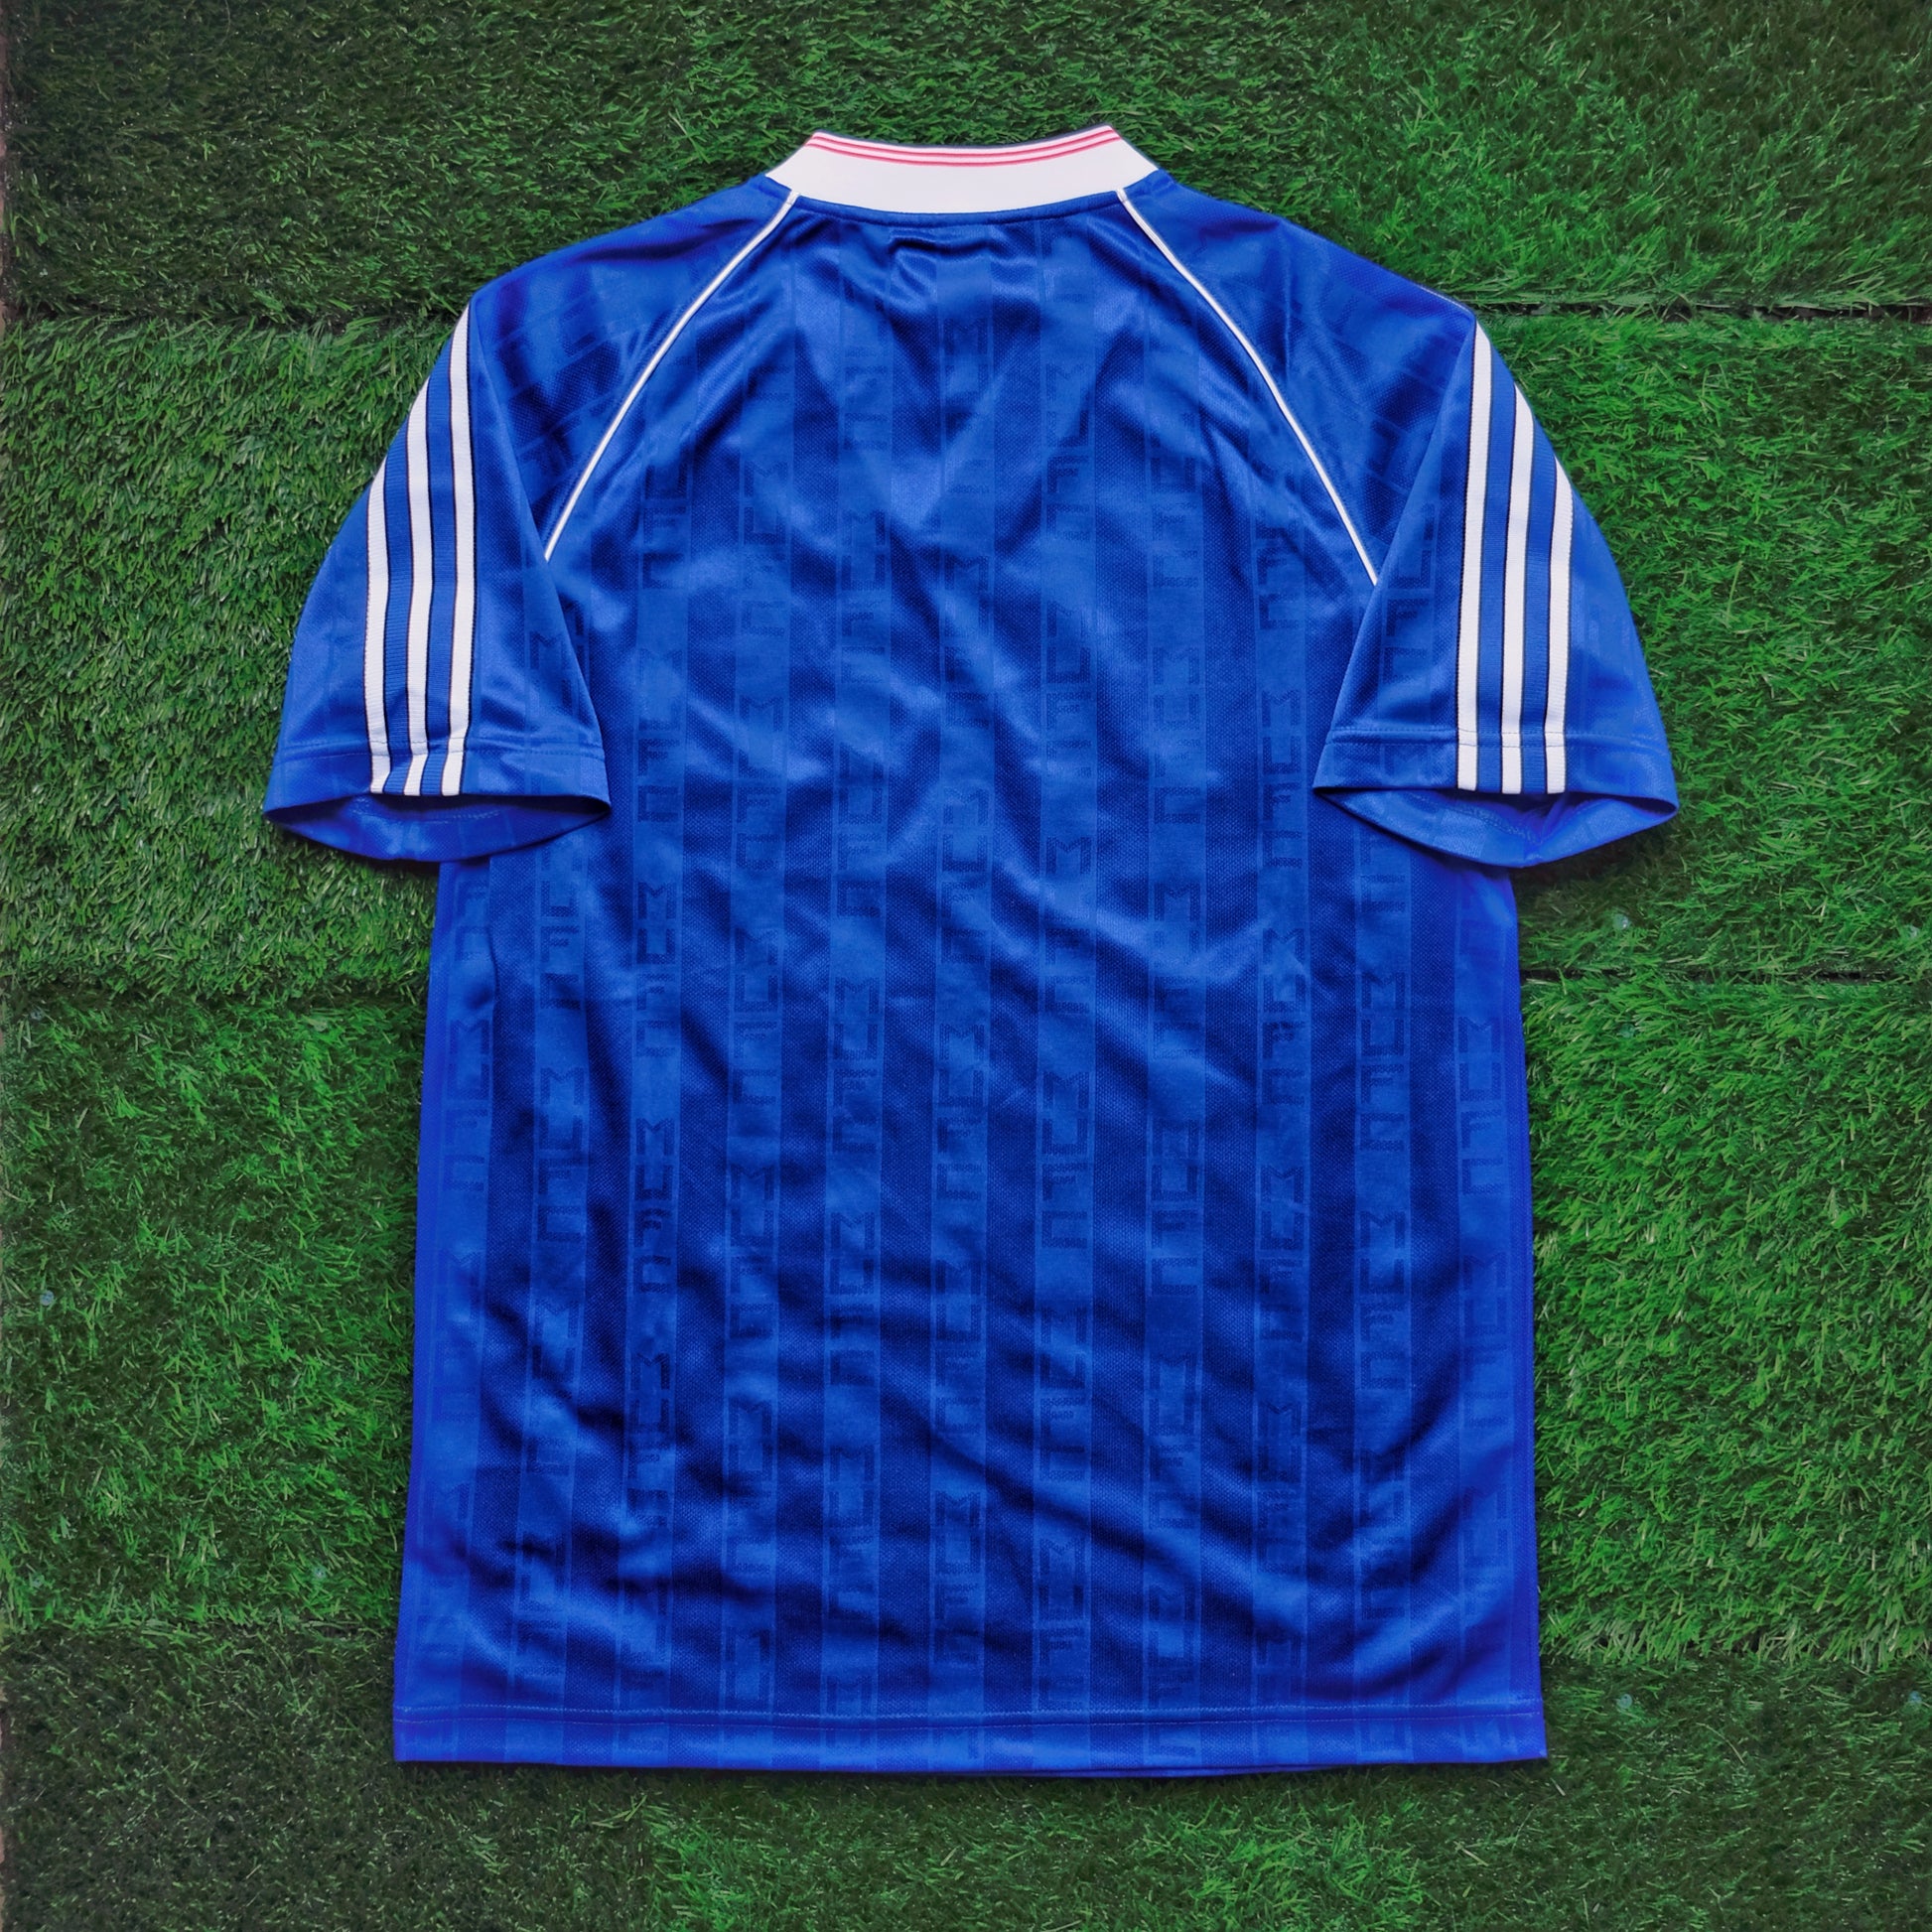 adidas Manchester United OG 1988-90 Third Jersey - Blue